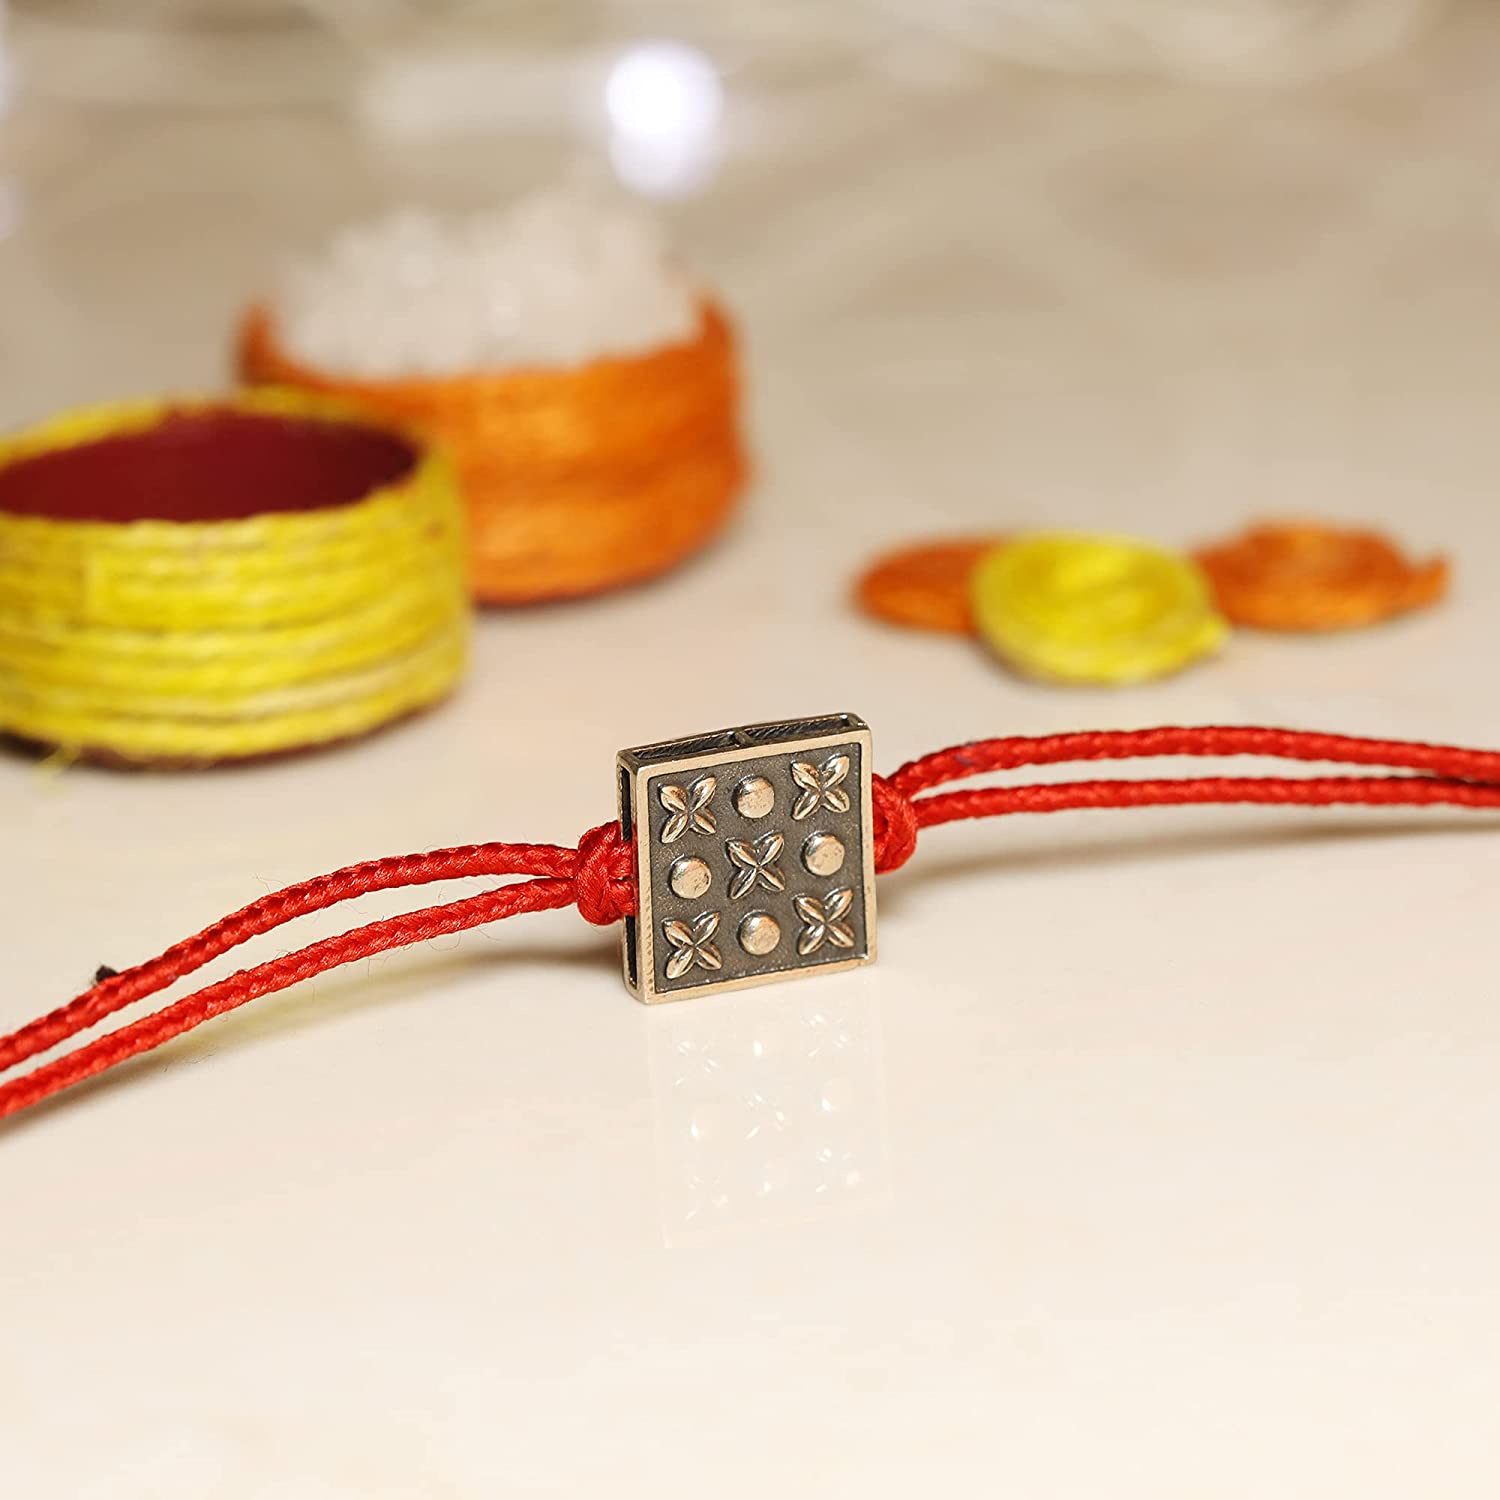 New Designable Rakhi Bracelets at Reasonable Prices